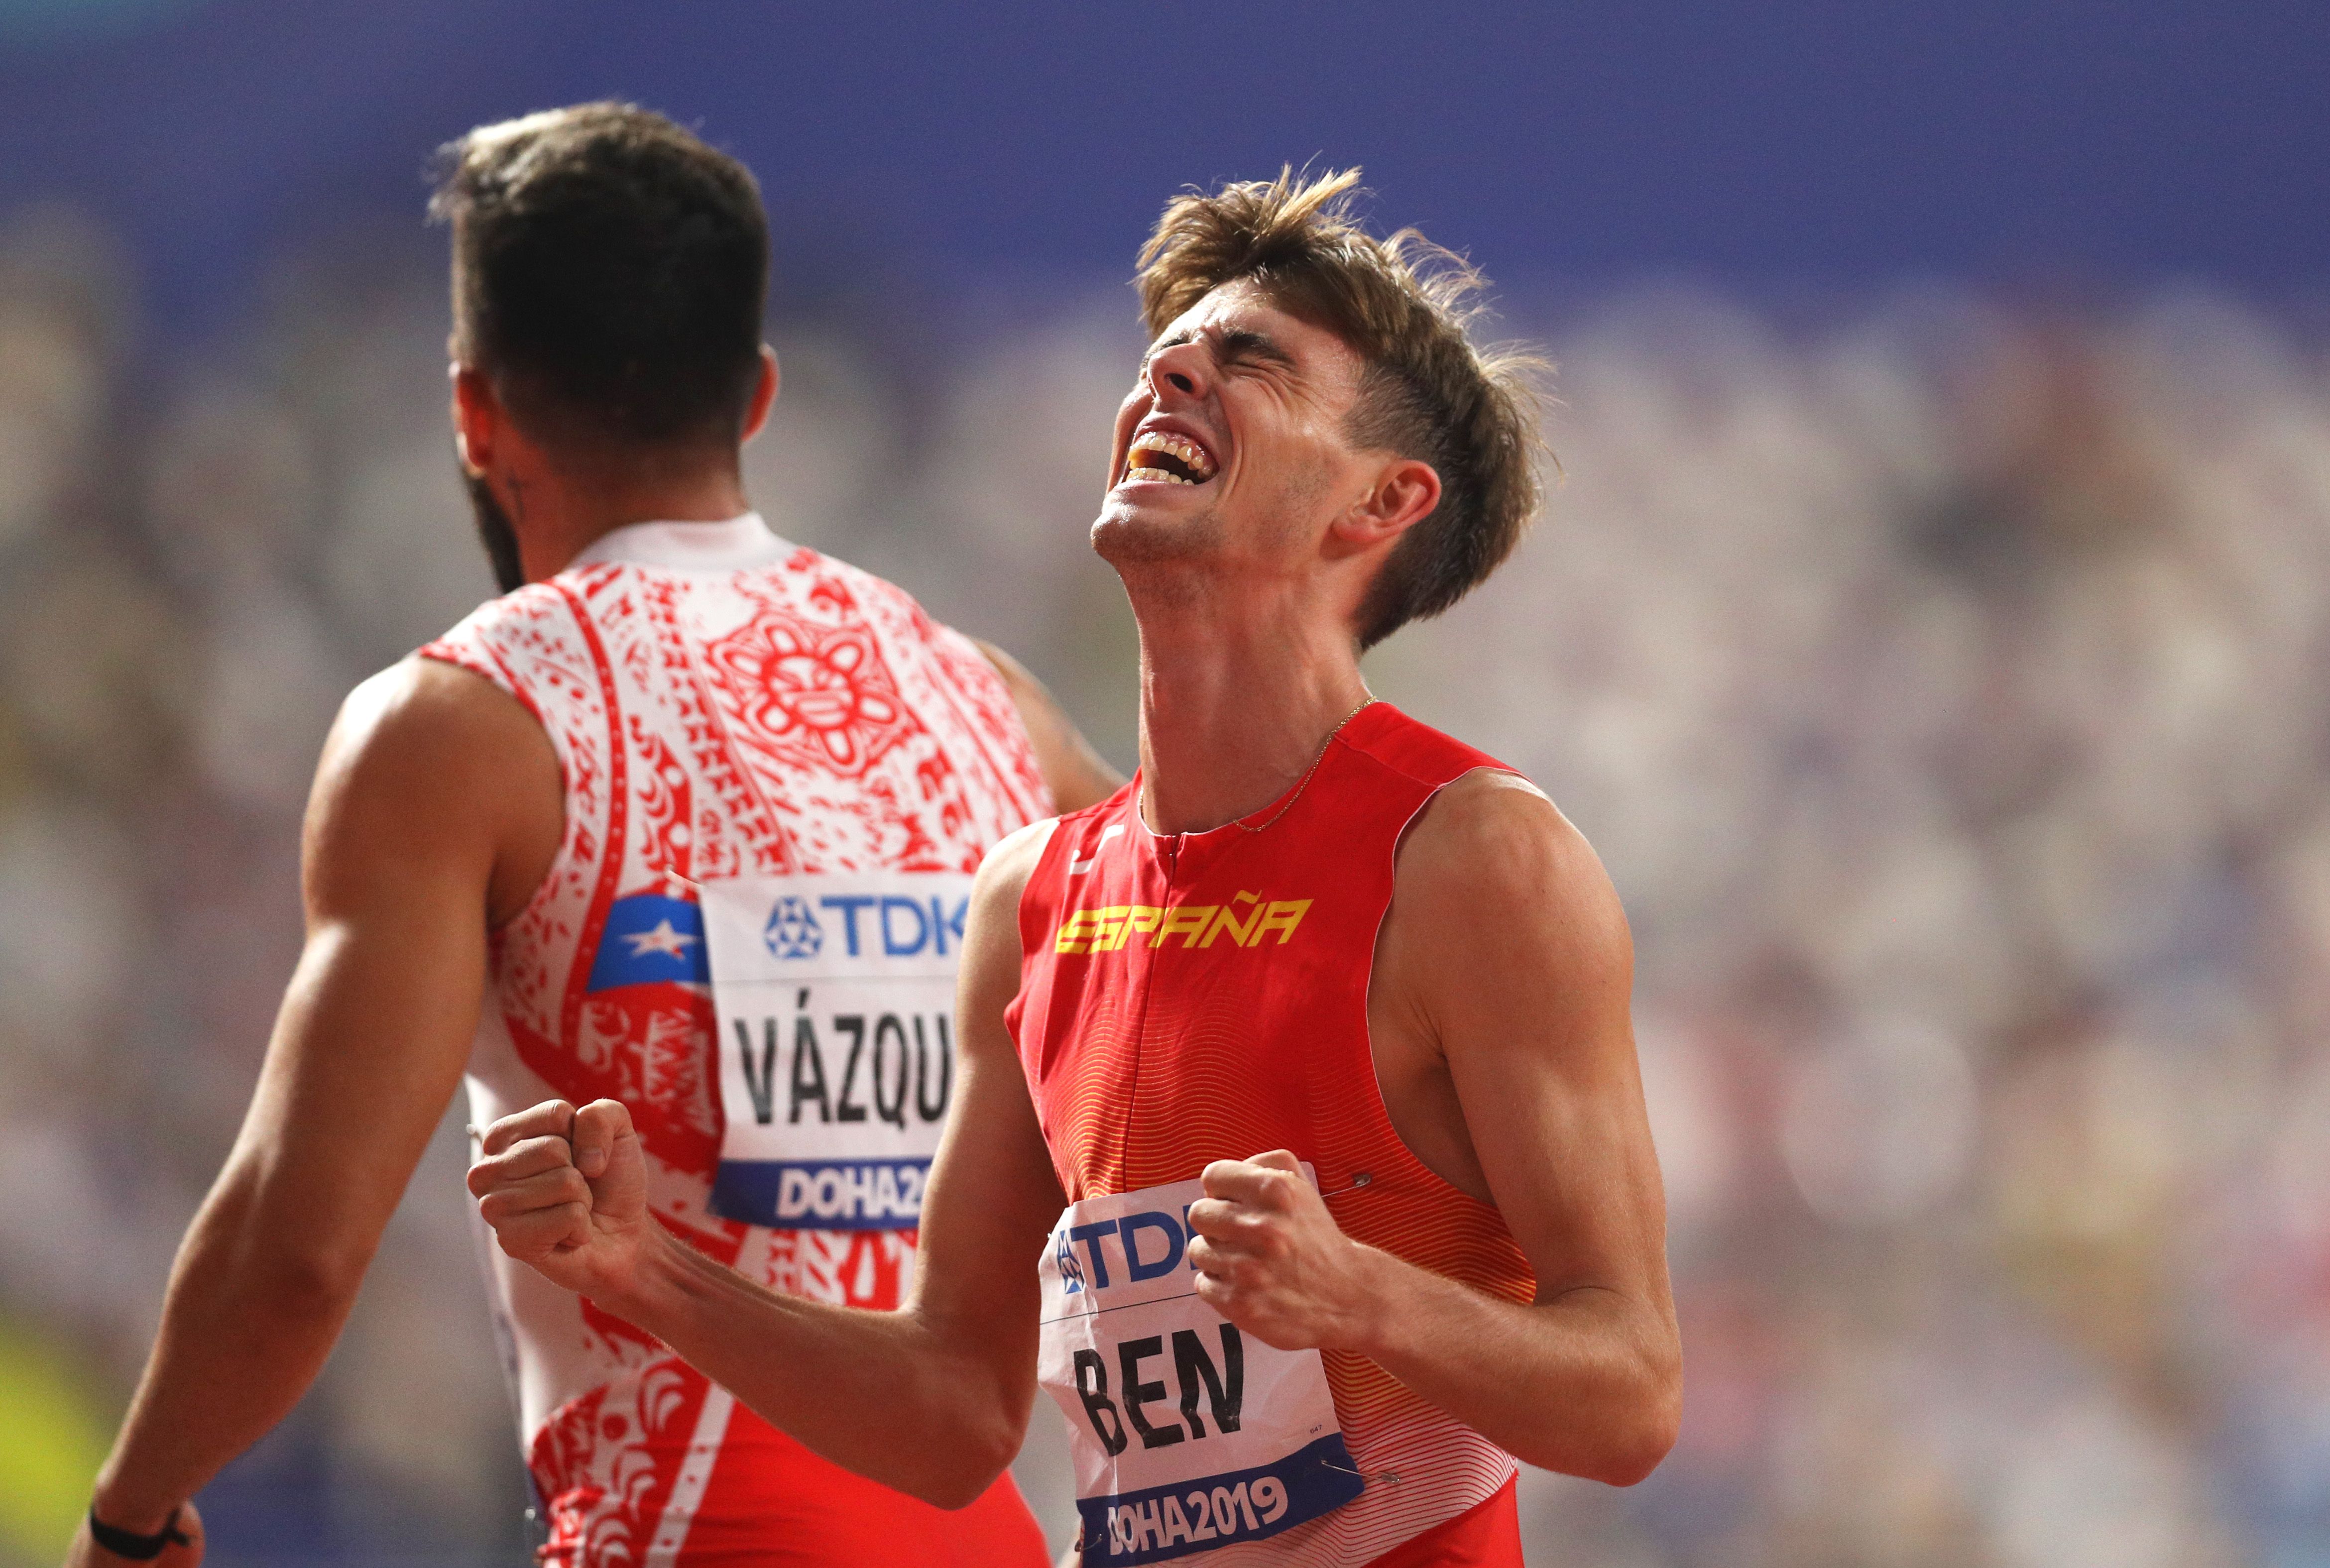 Adrian Ben at the World Athletics Championships Doha 2019